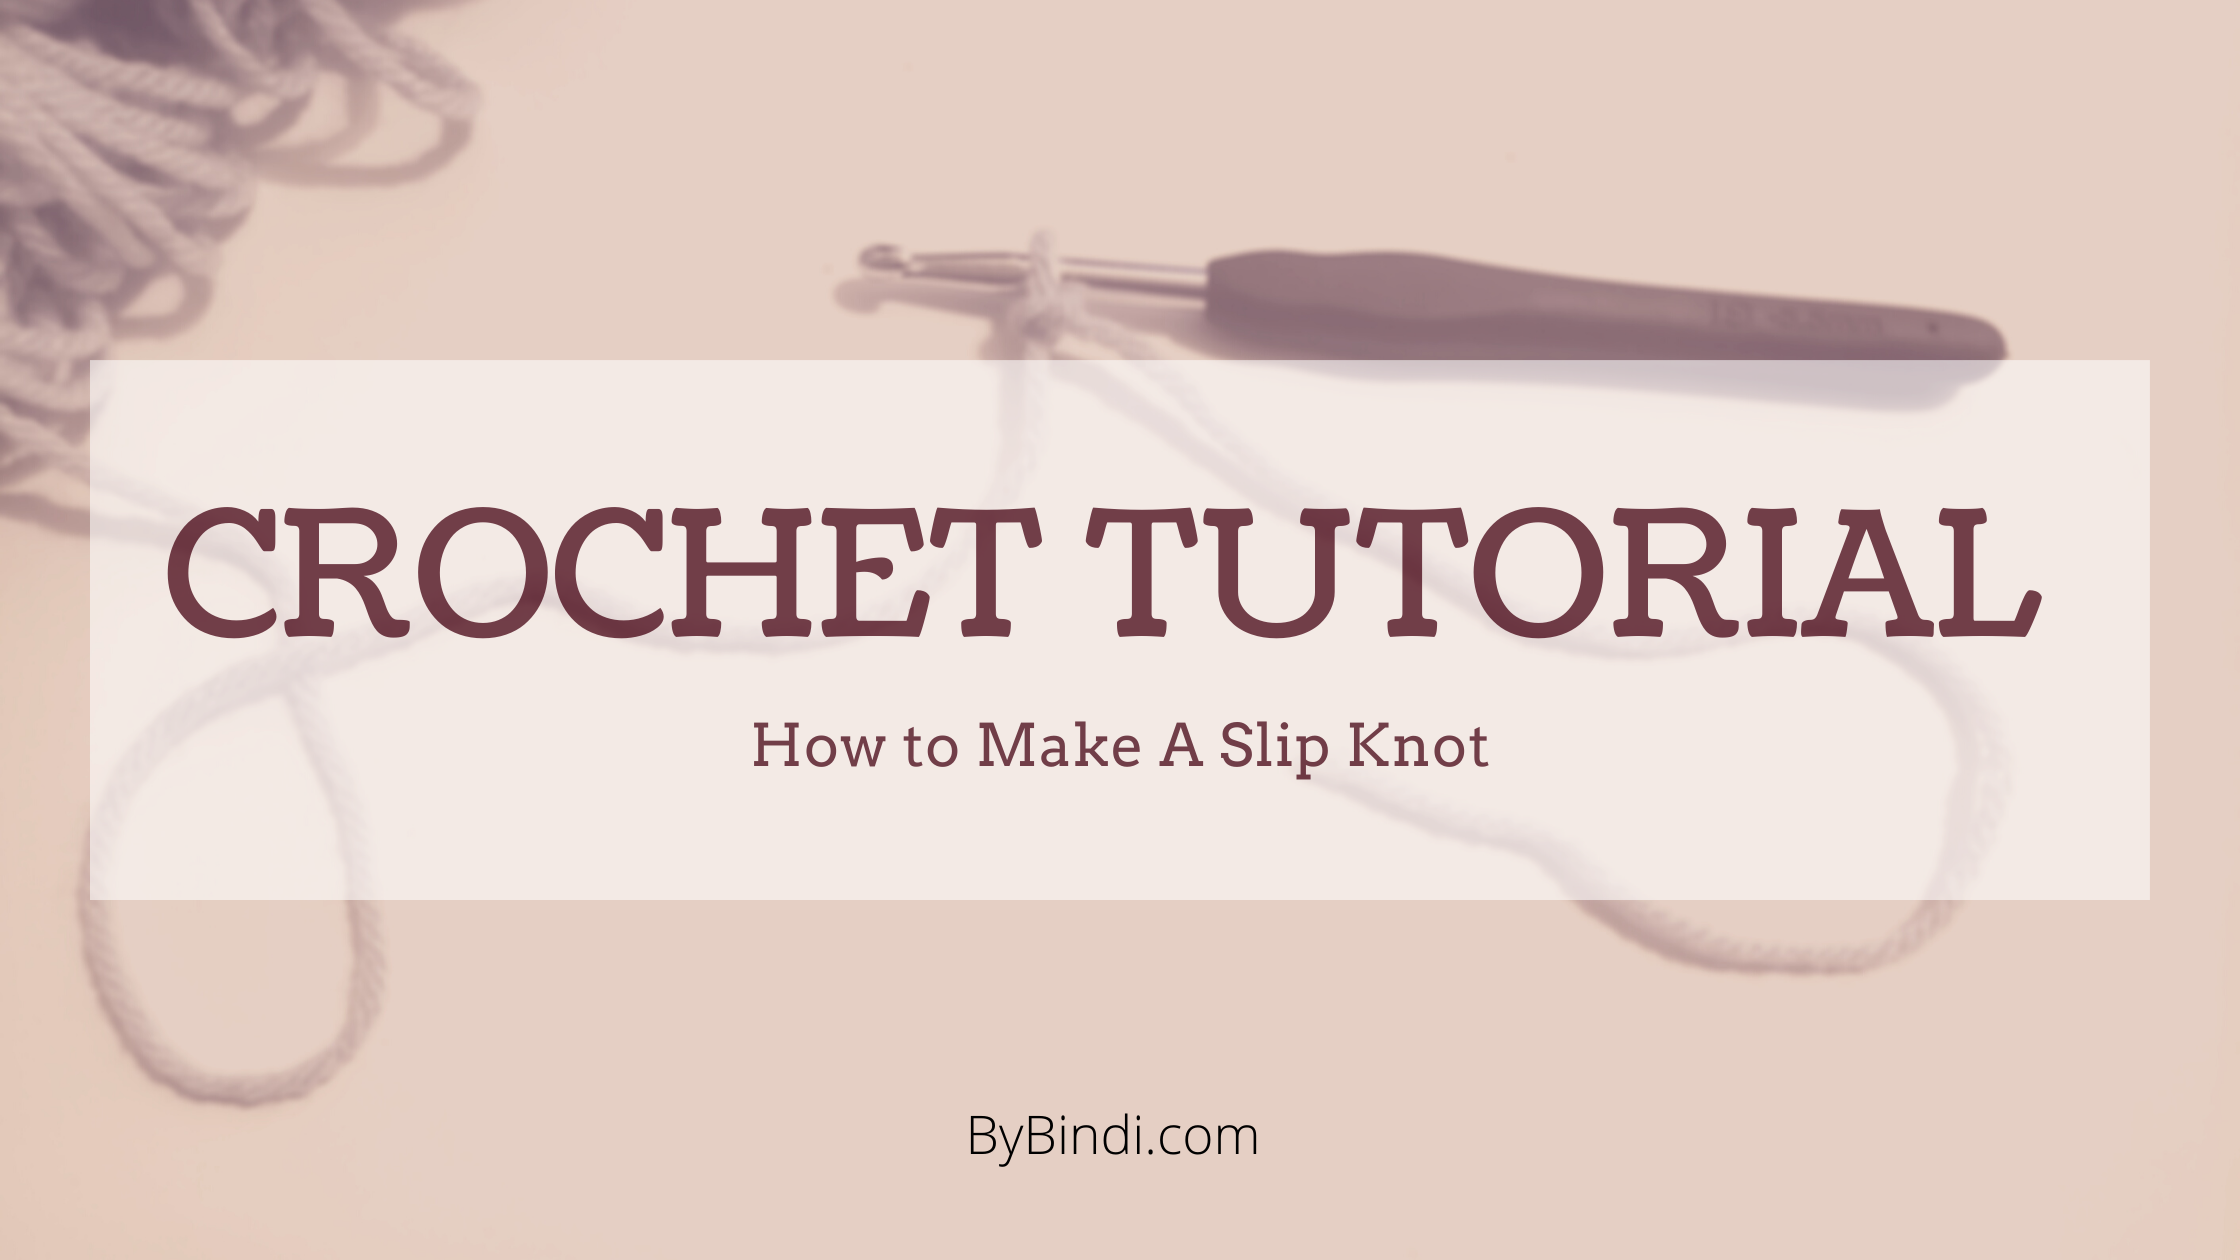 Crocheting for Beginner's, How to Make a Slip Knot